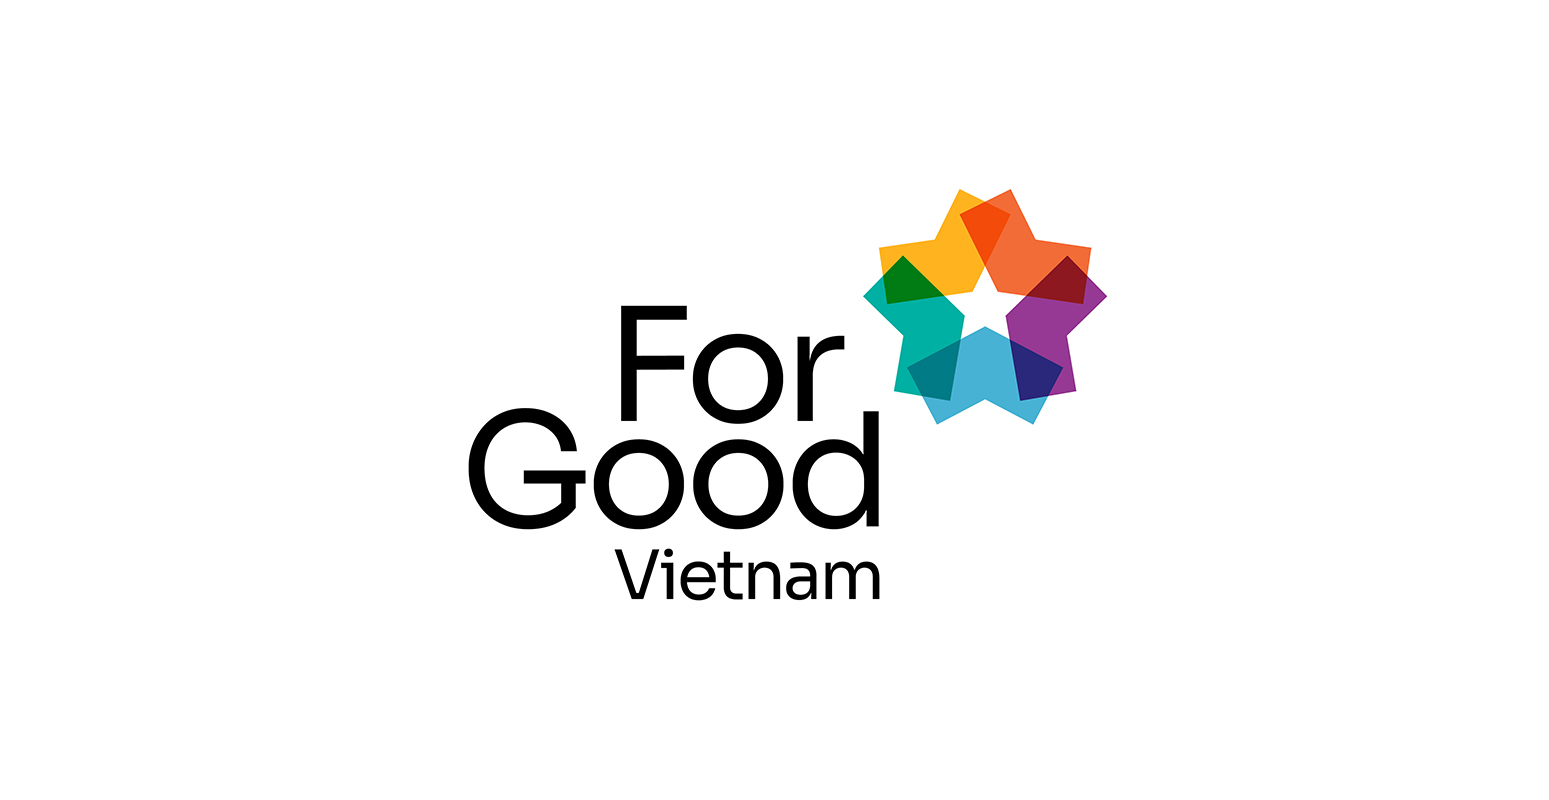 Manifesco Designs Vibrant Visual Identity for Forgood Vietnam’s Inclusive Mission